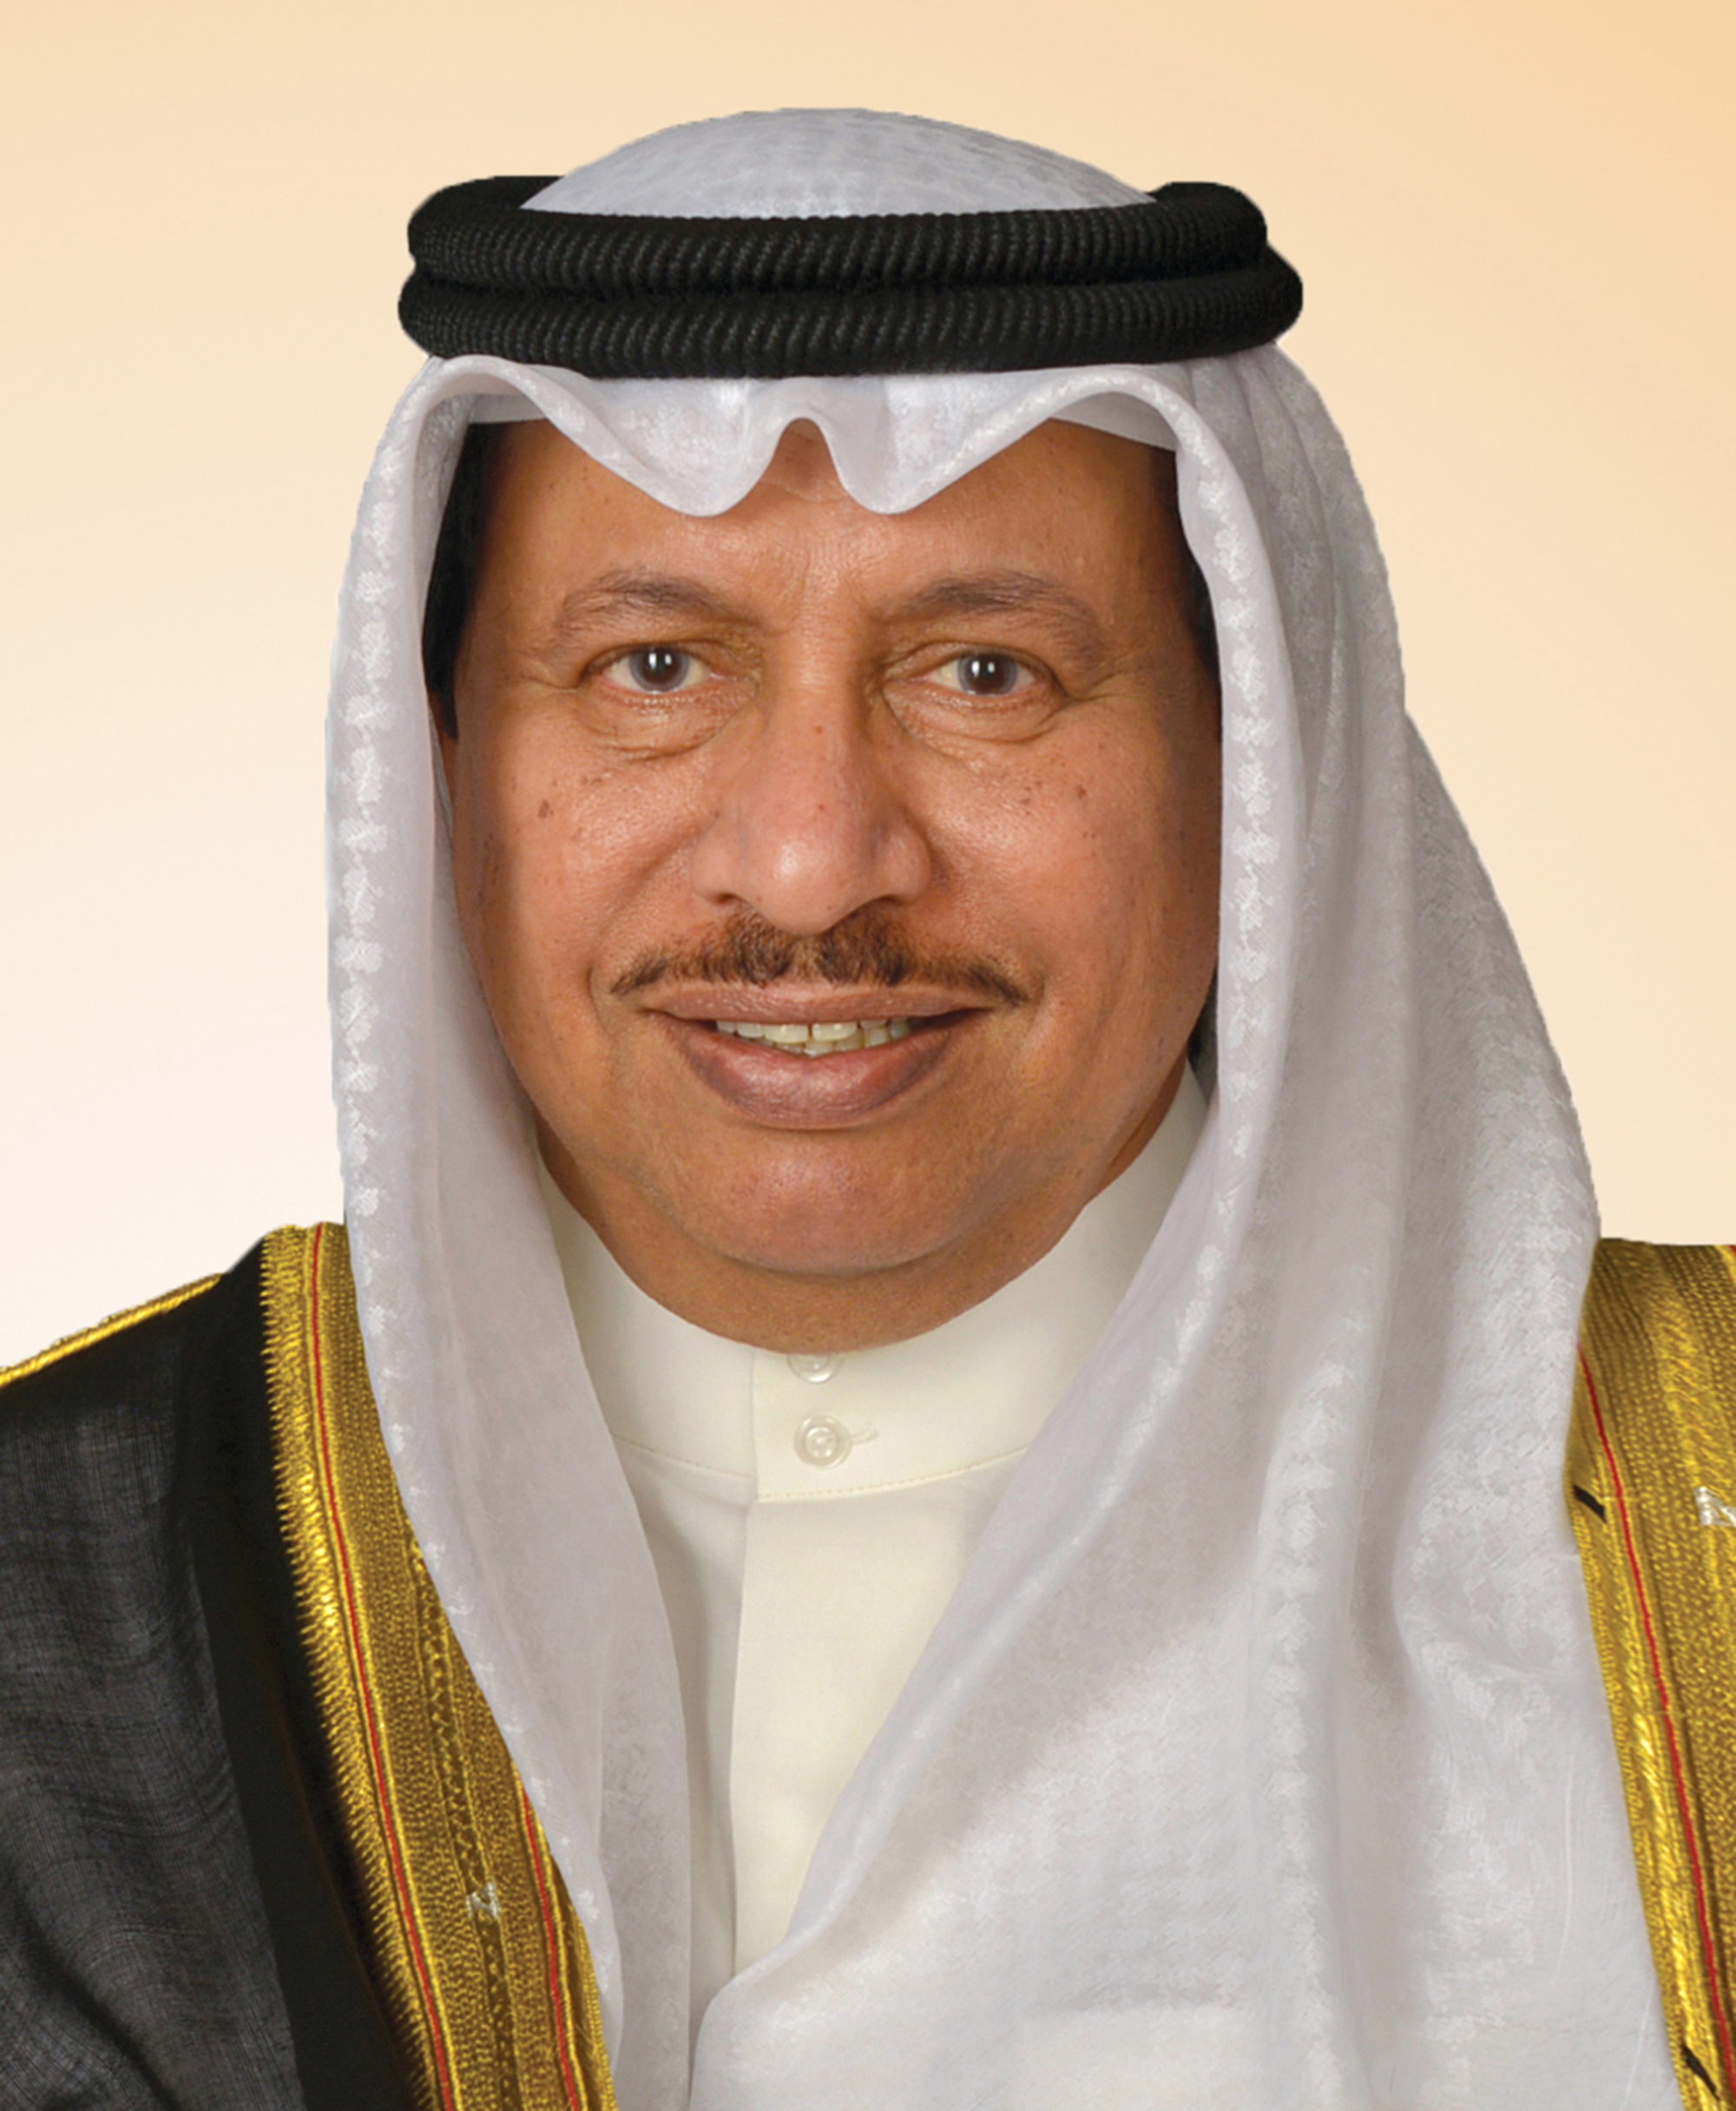 His Highness Sheikh Jaber Al-Mubarak Al-Hamad Al-Sabah